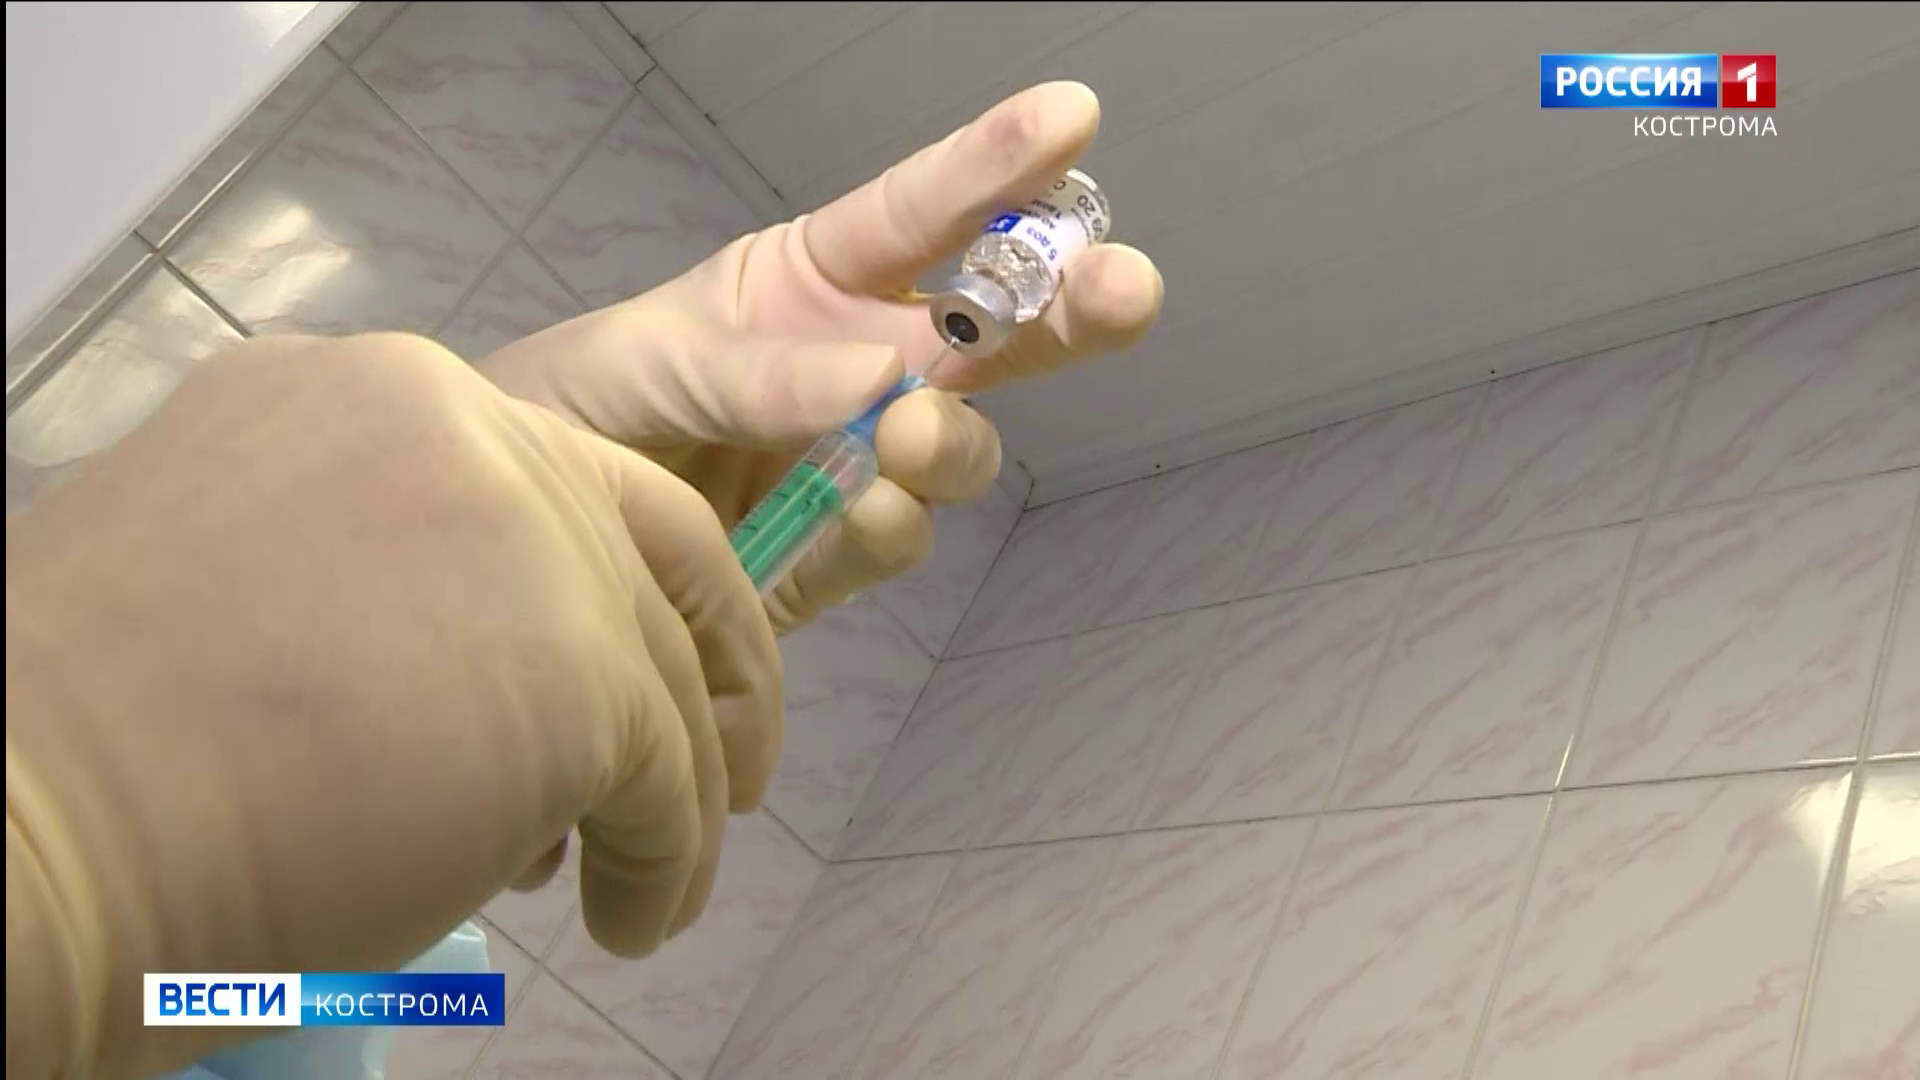 Прививки от коронавируса на сегодня сделаны 253 385 жителям Костромской области